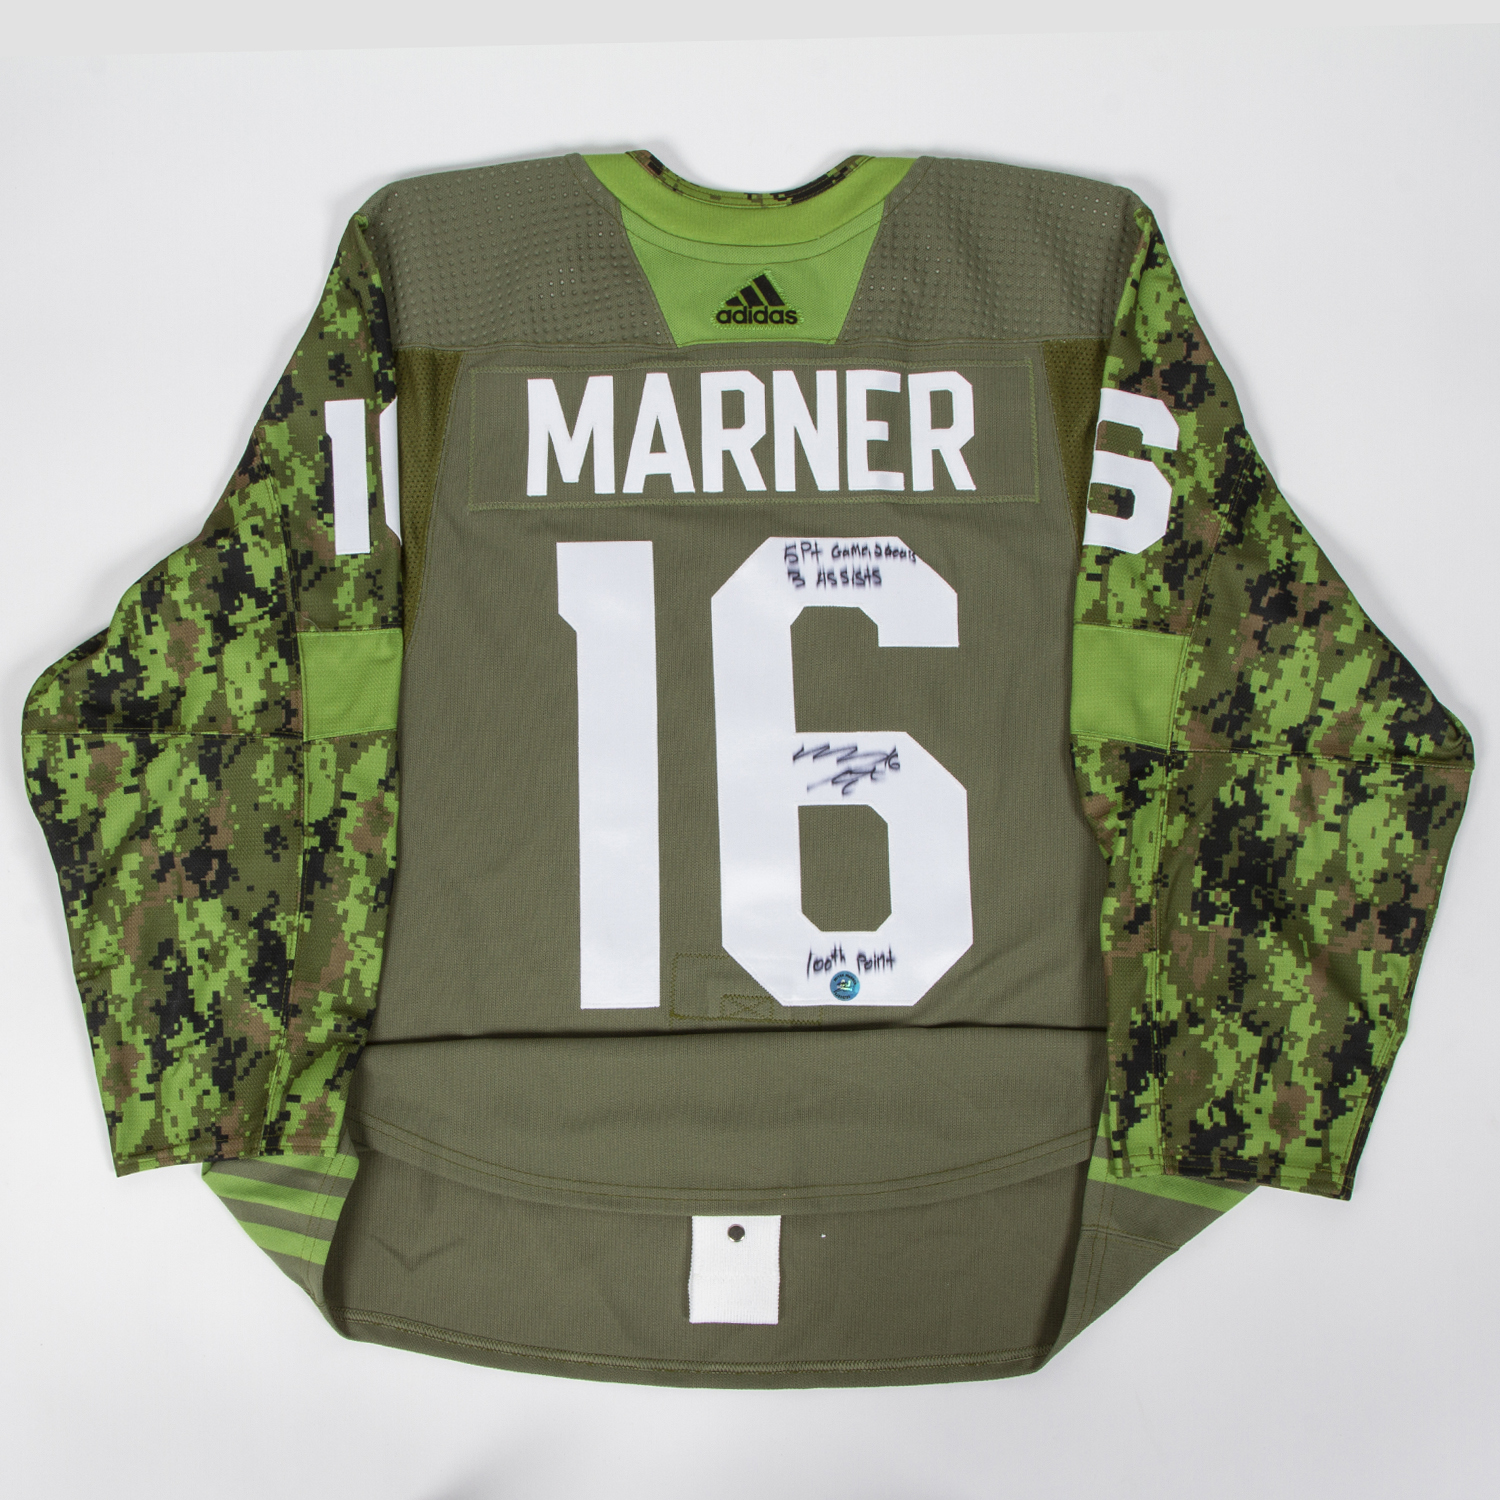 WARMINGTON: Marner's jersey sees top bid so far in ALS sweater